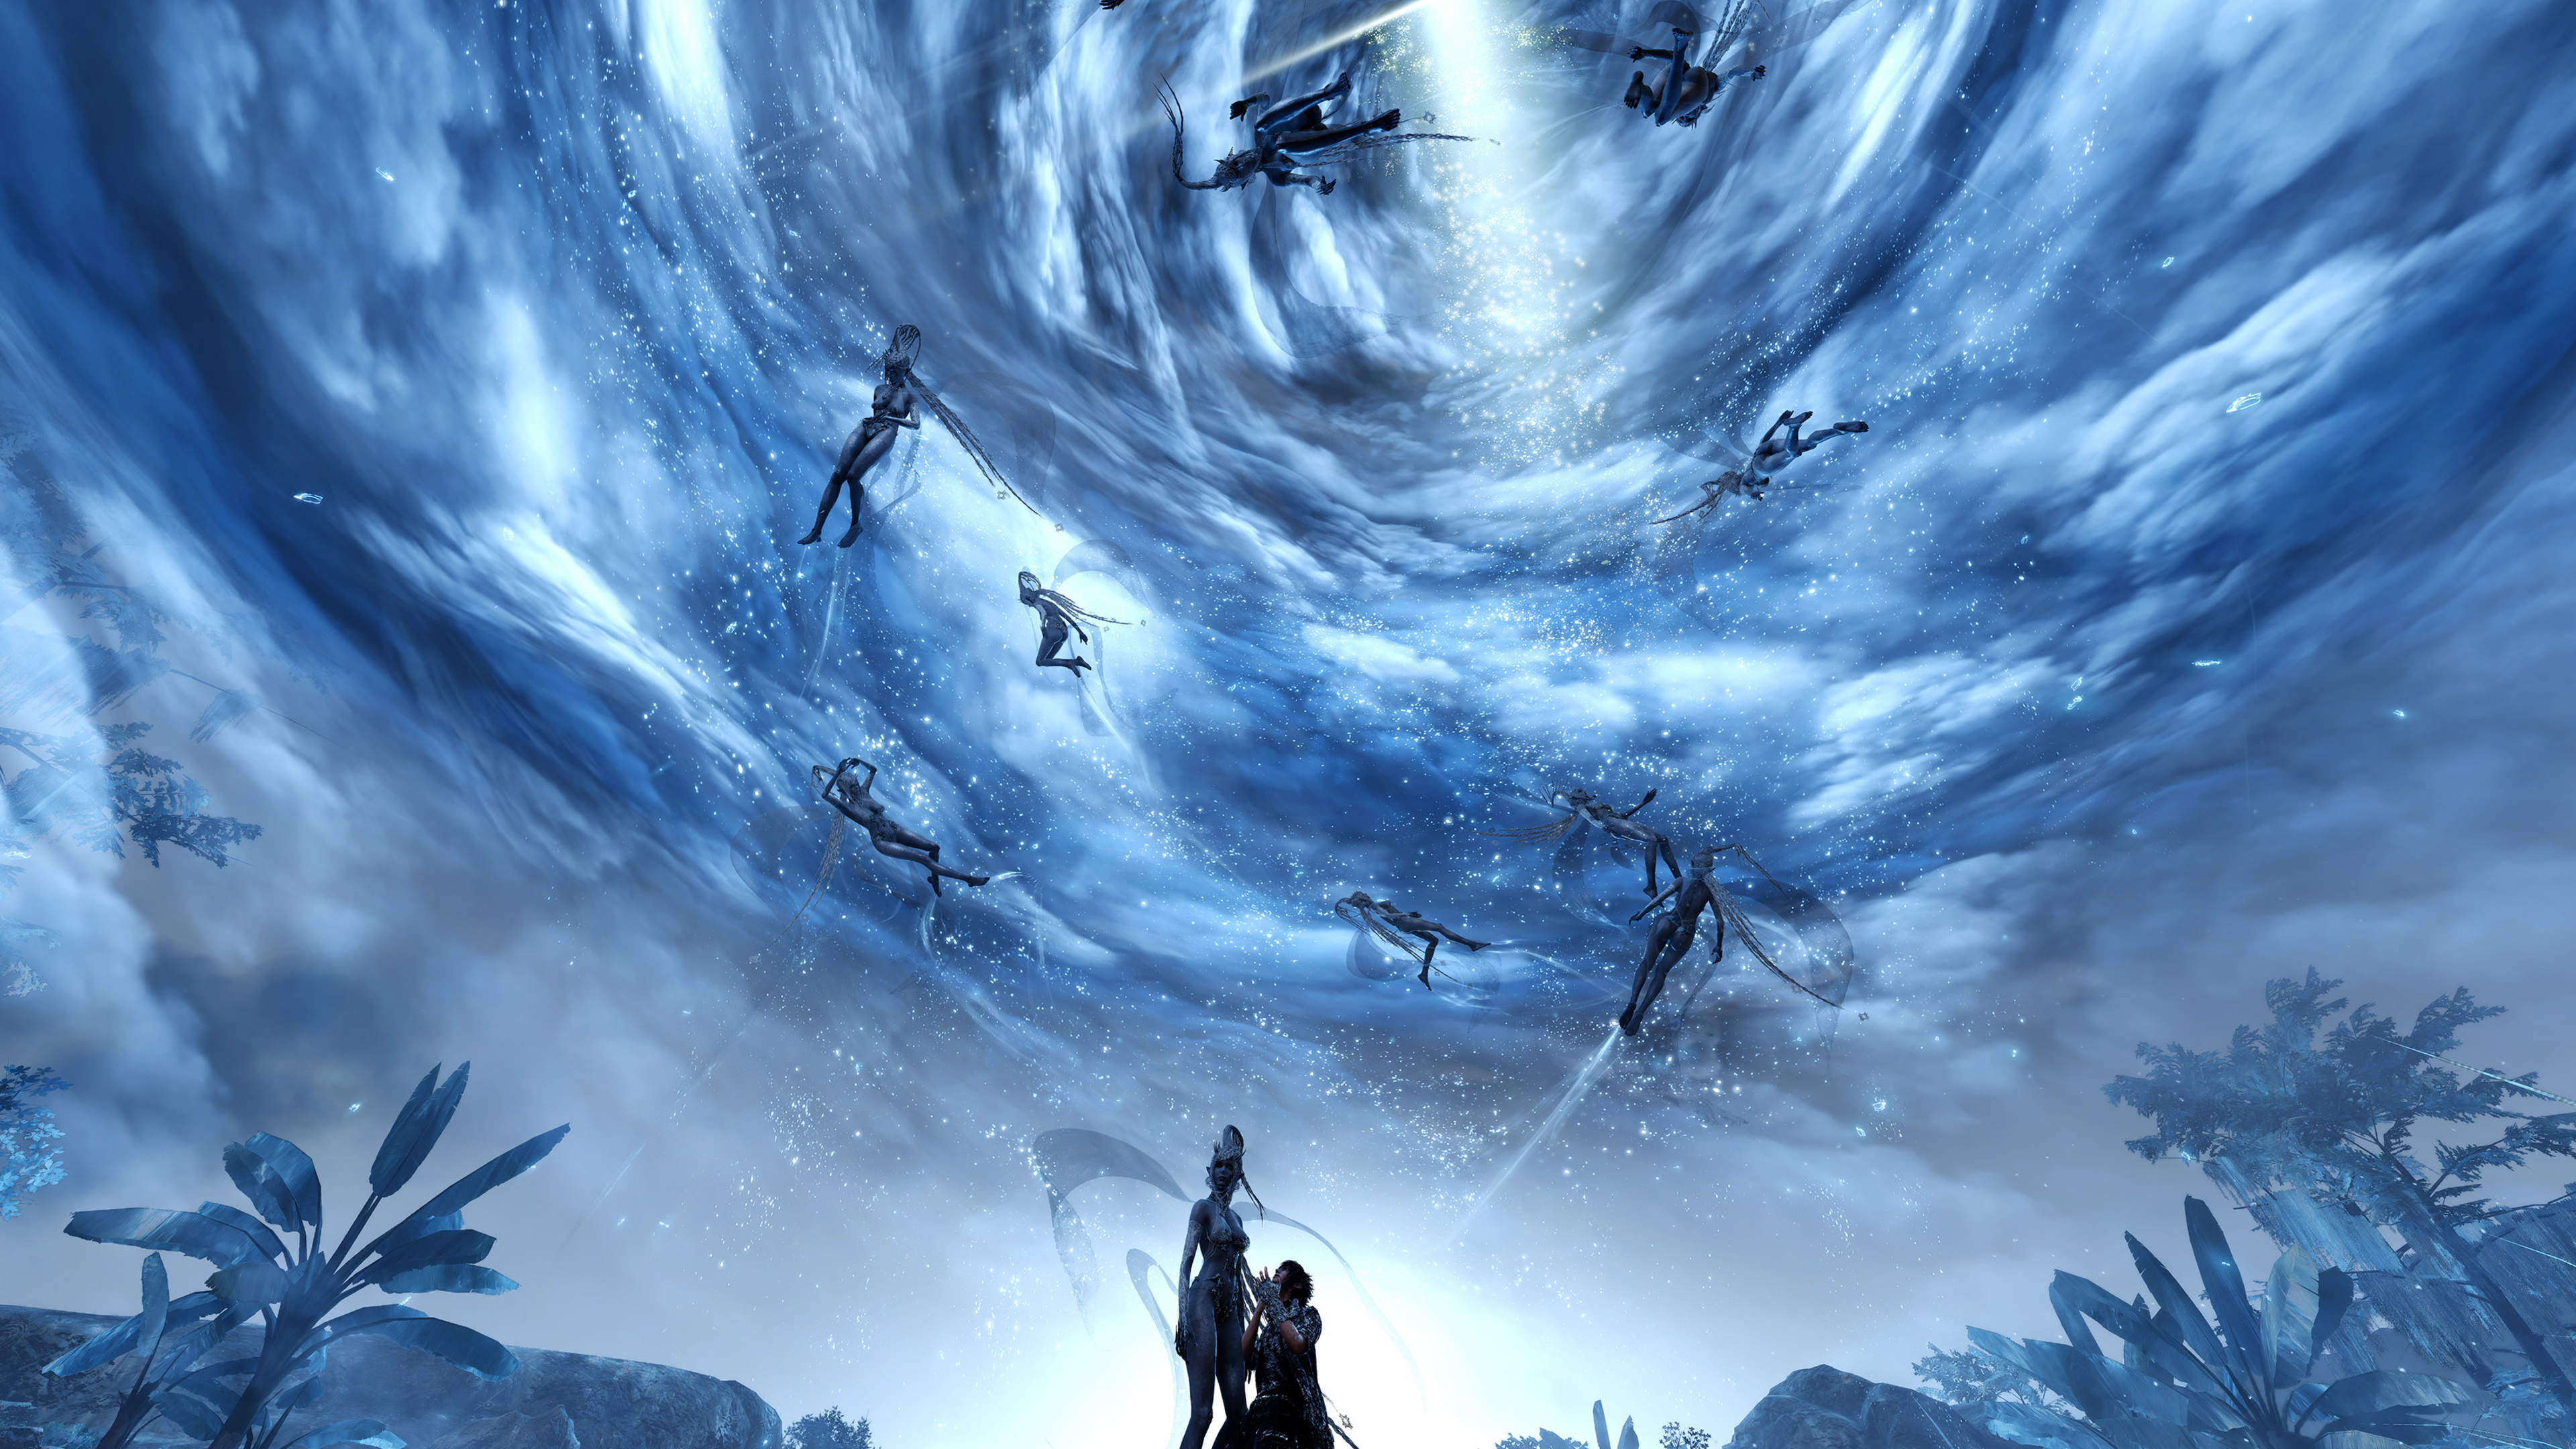 Final Fantasy Xv, Final Fantasy VII Remake, Illustration, Espace, la Mythologie. Wallpaper in 3840x2160 Resolution